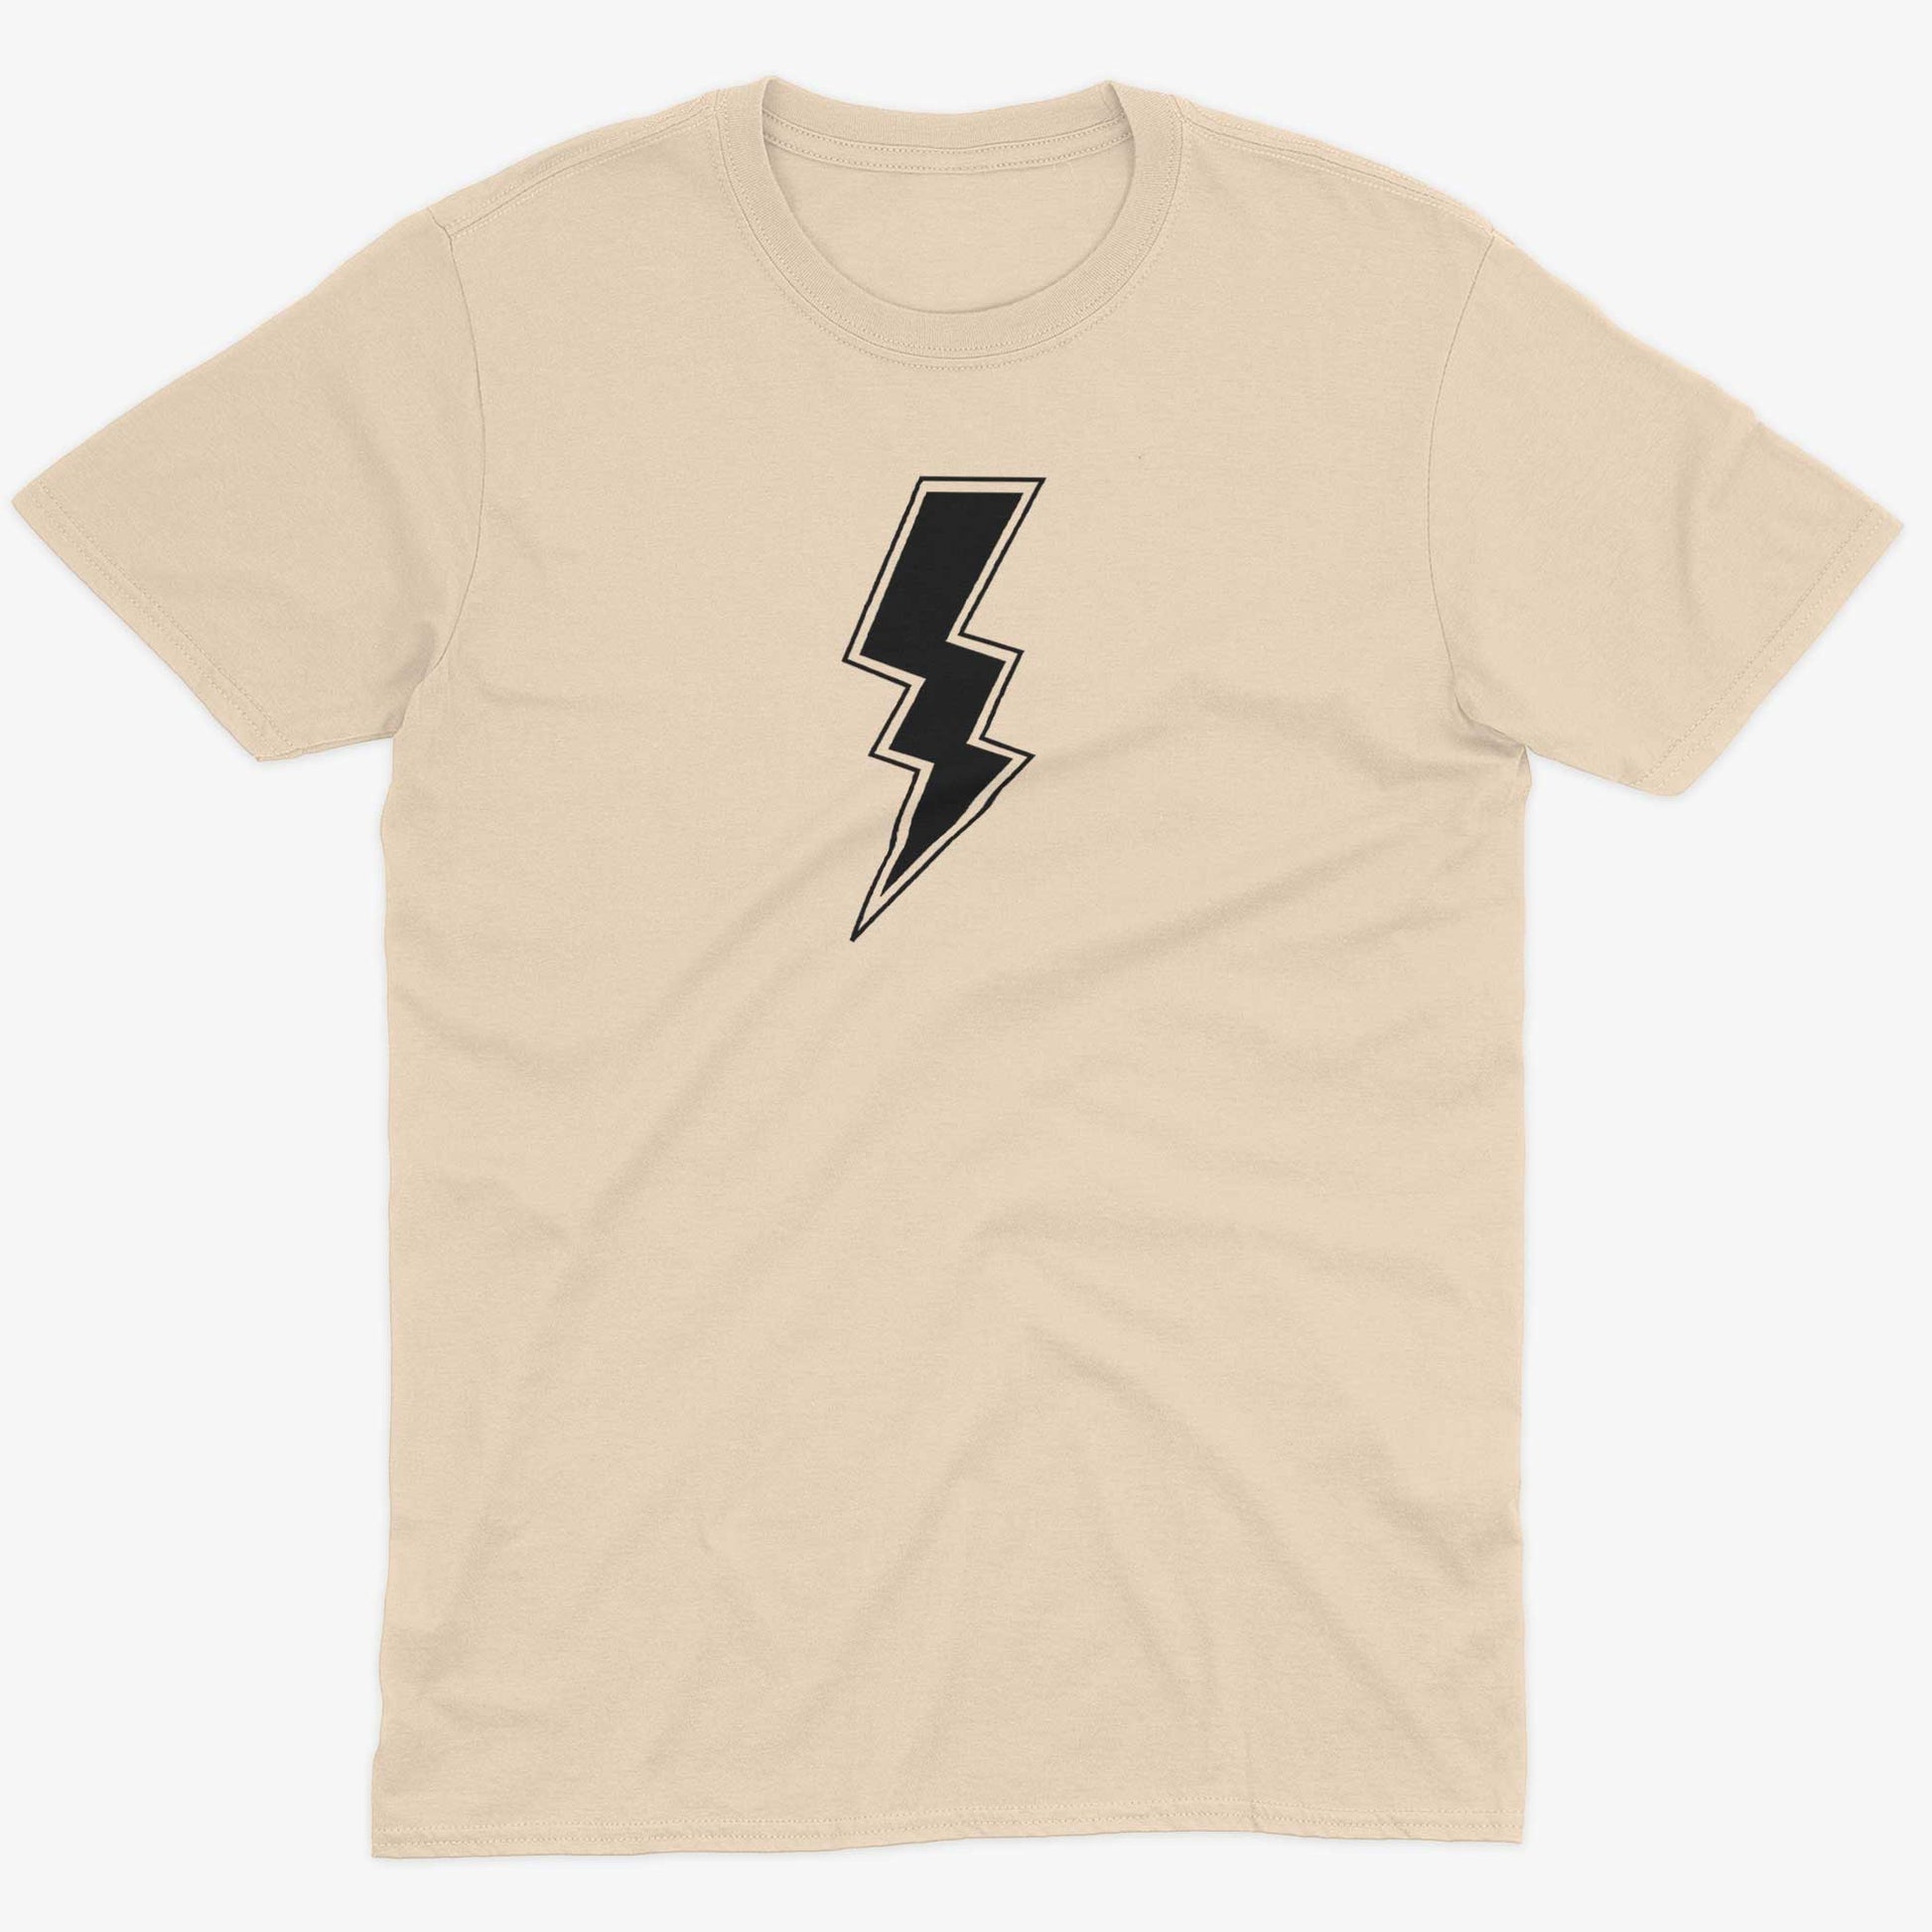 Giant Lightning Bolt Unisex Or Women's Cotton T-shirt-Organic Natural-Unisex